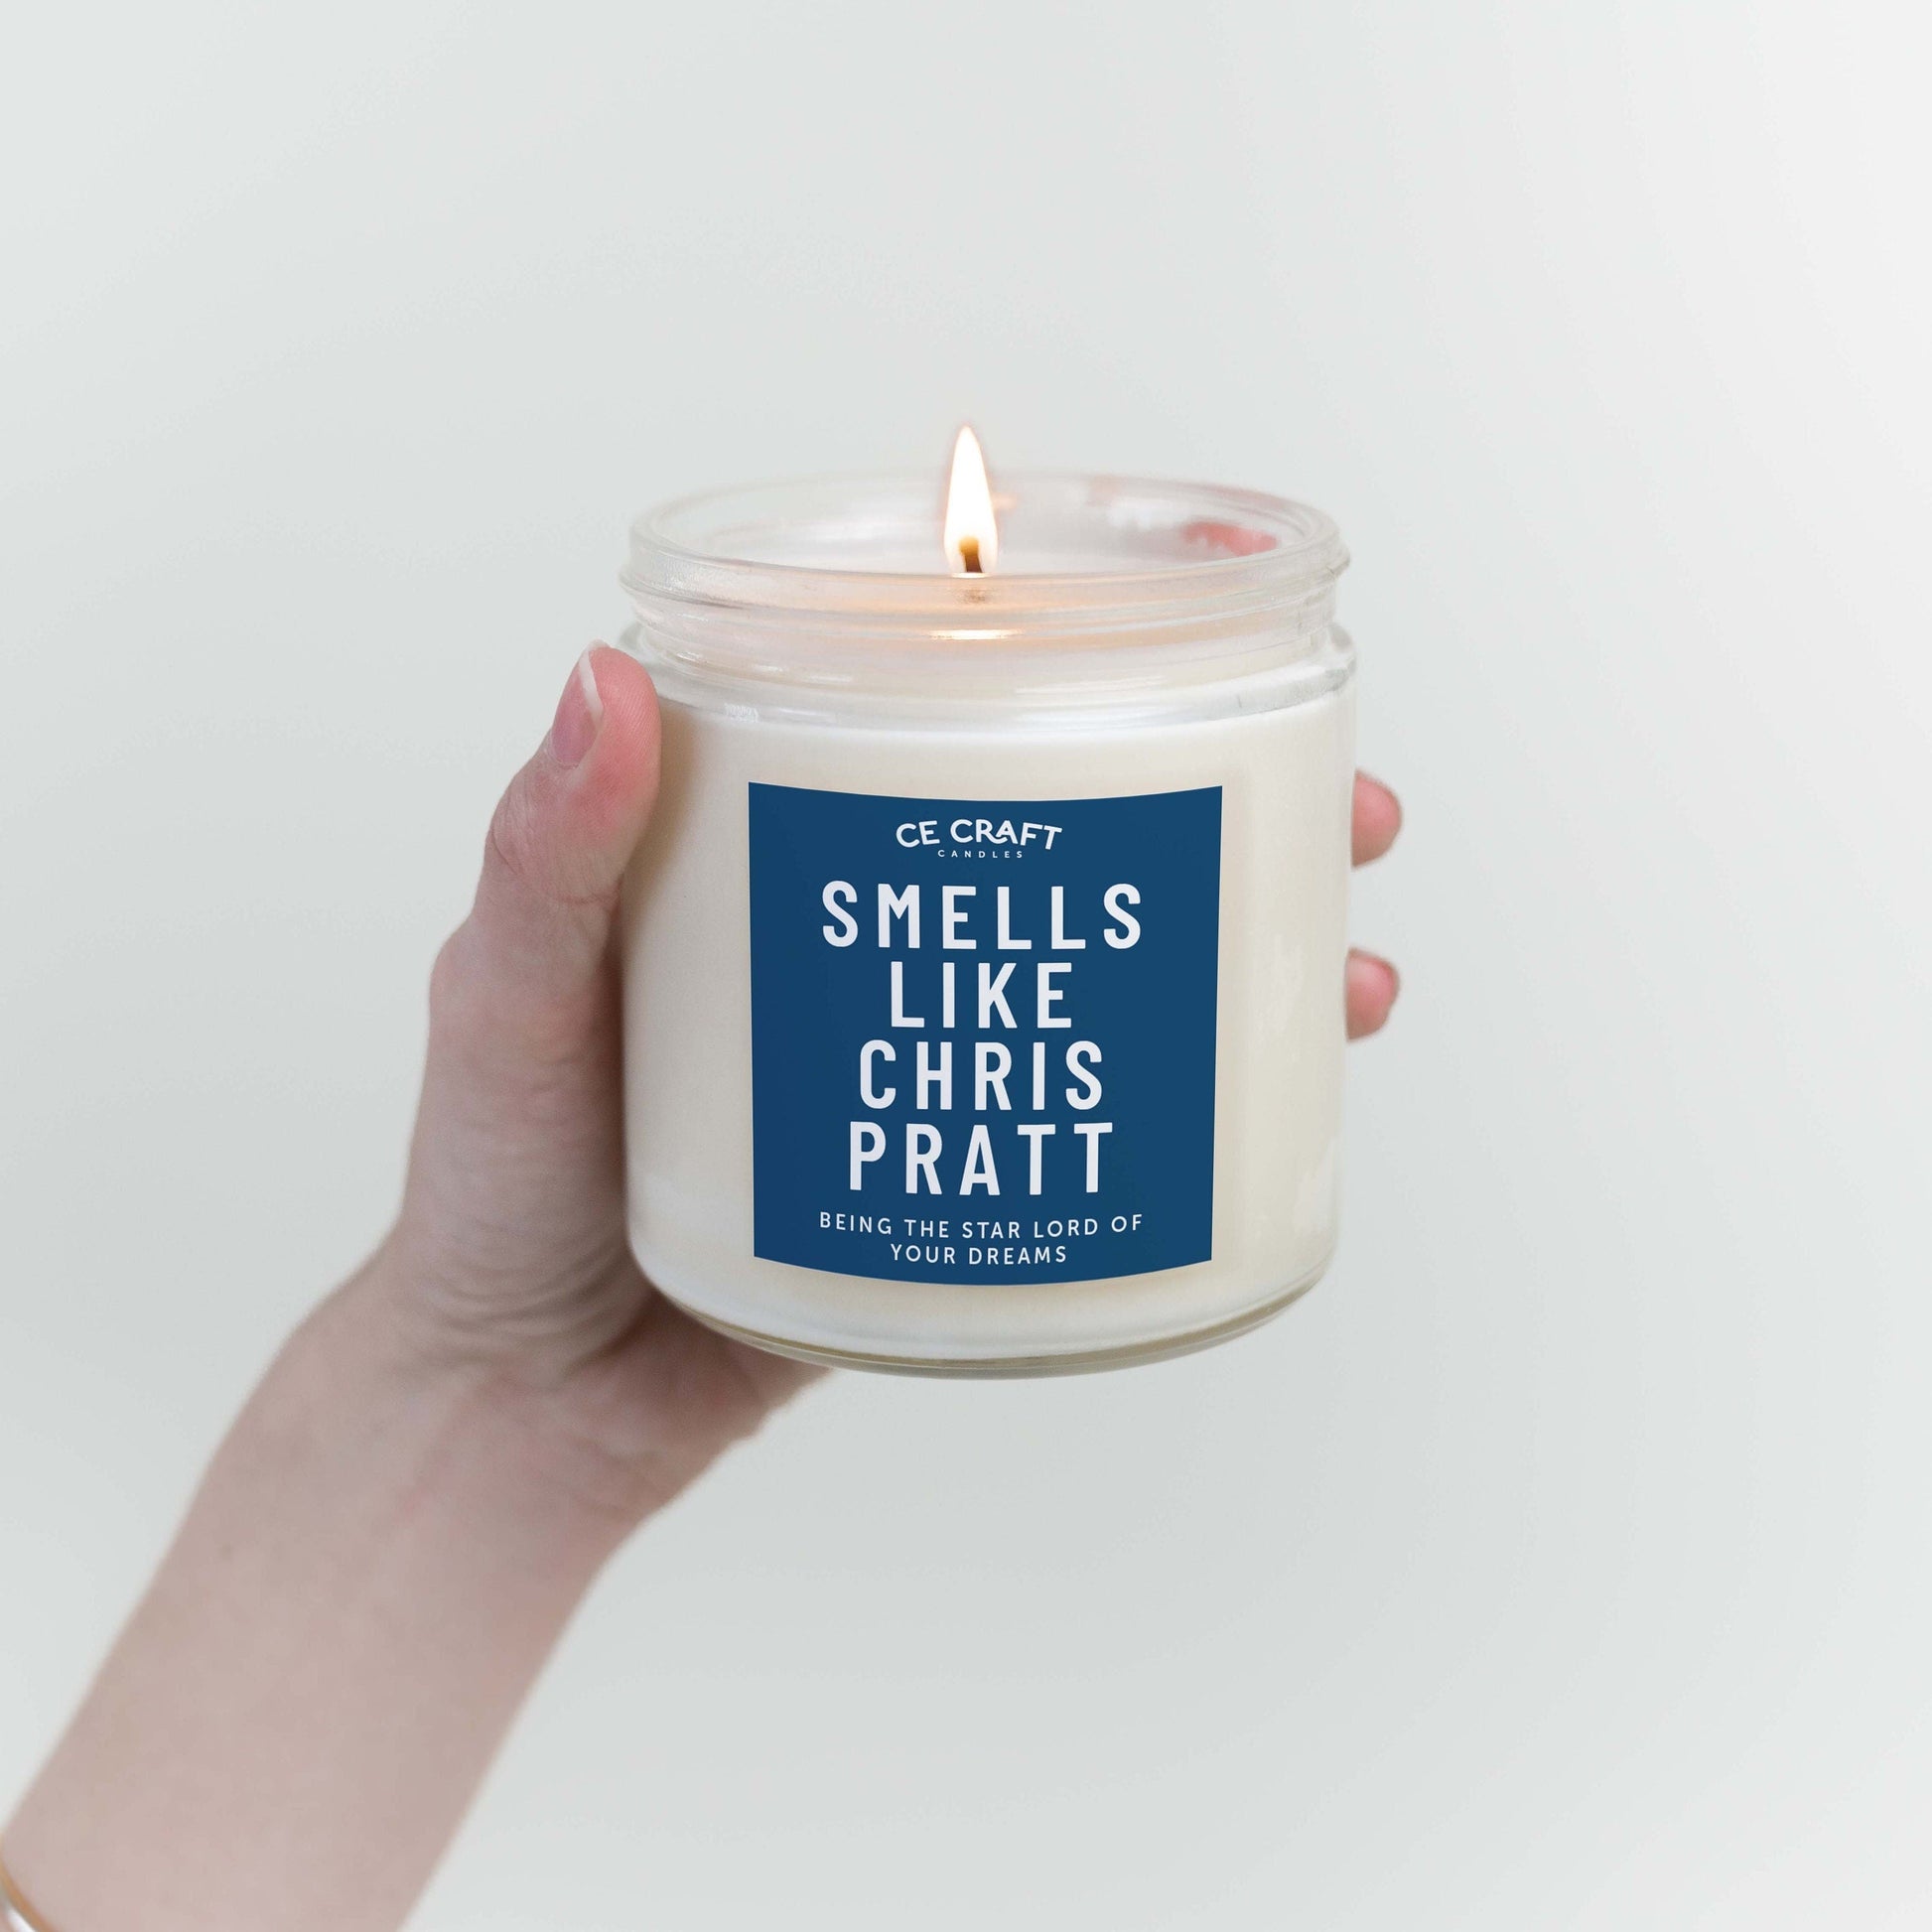 Smells Like Chris Pratt Candle Candle CE Craft 